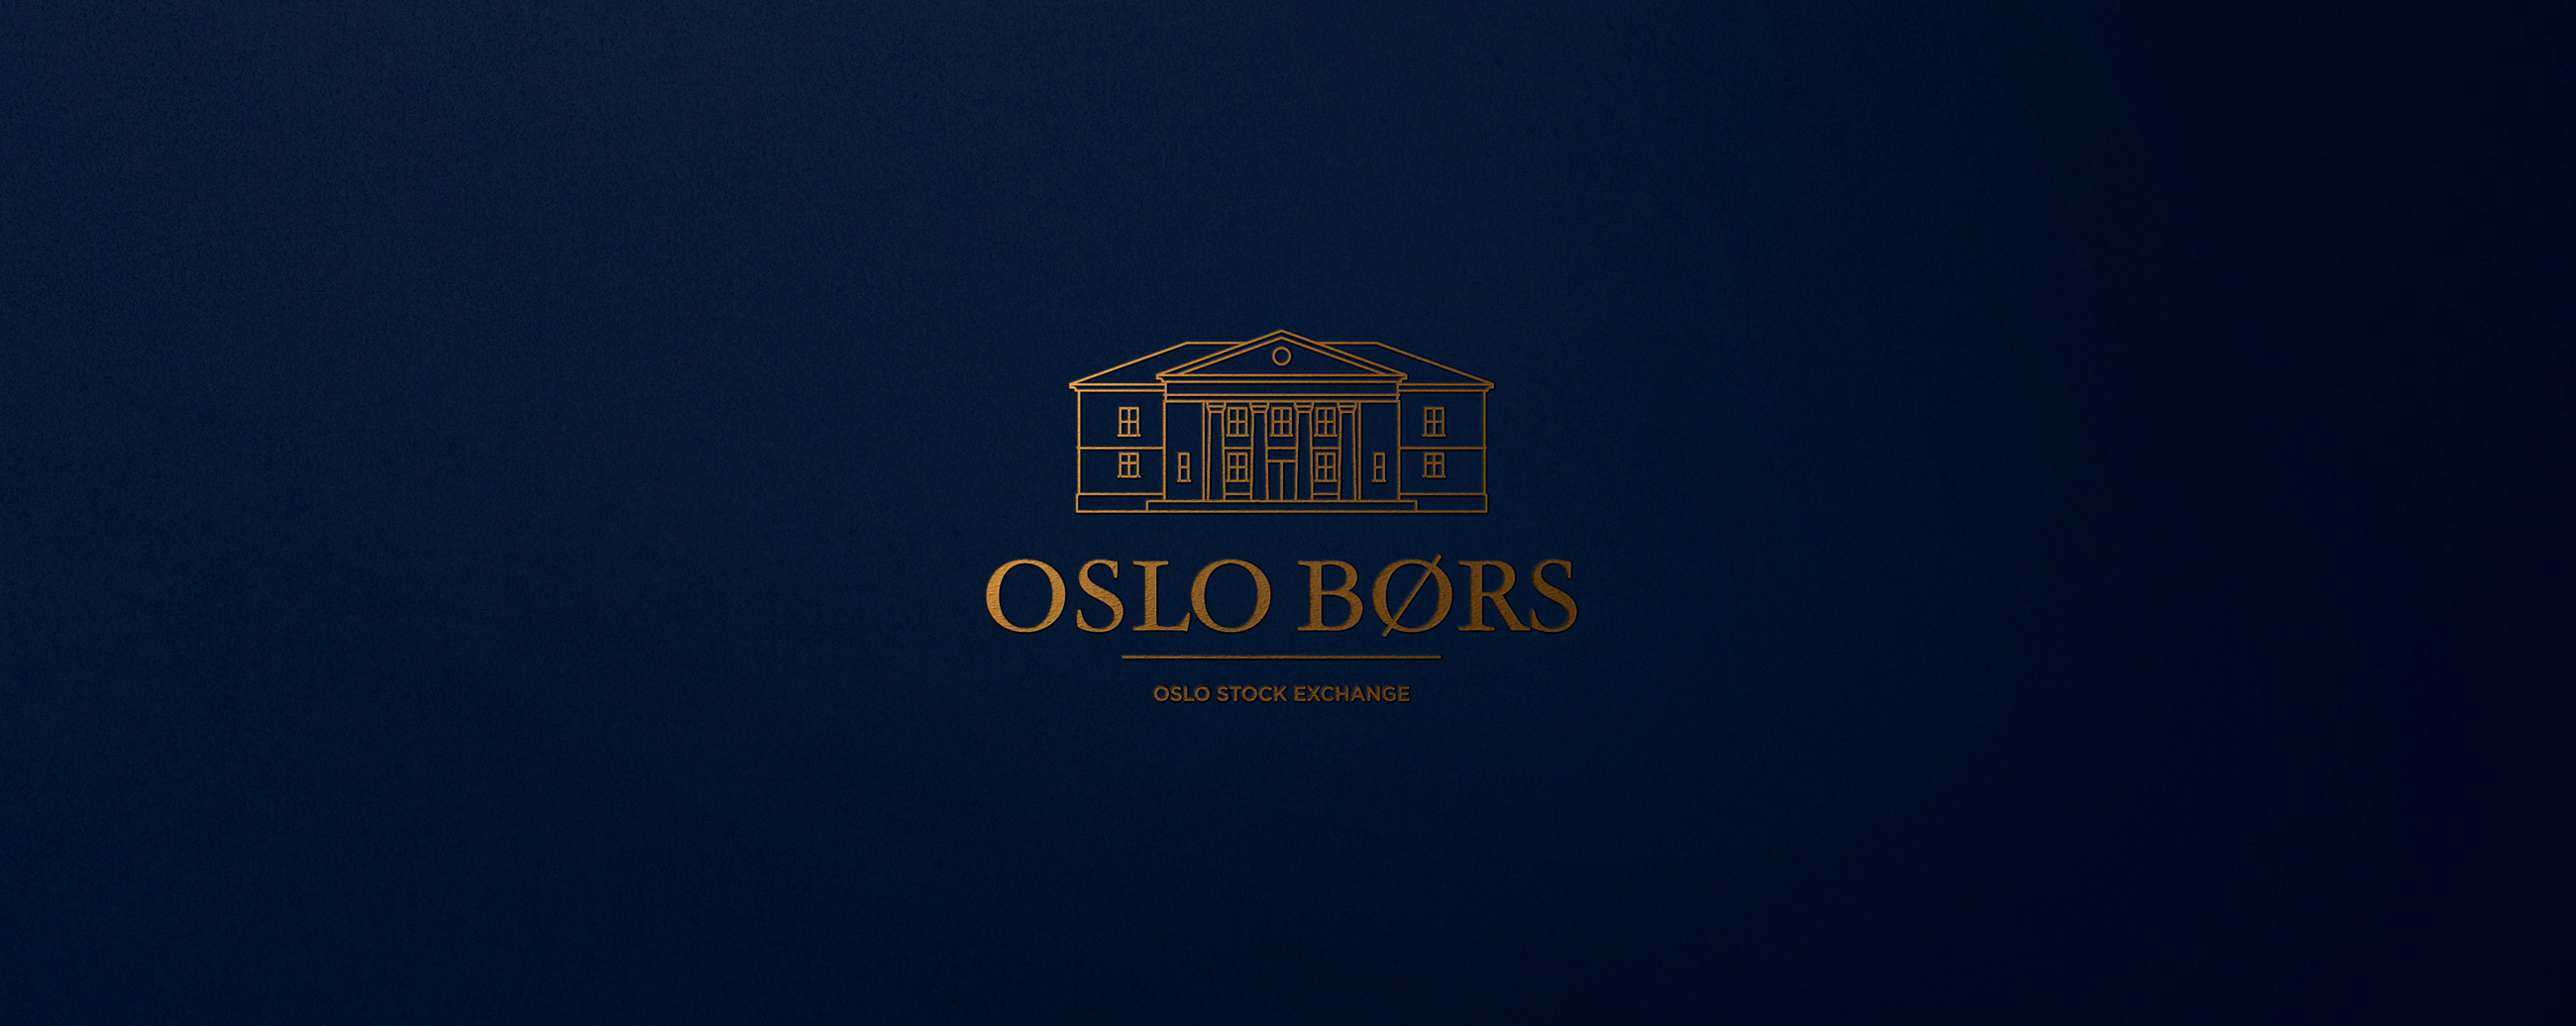 Oslo børs stock market logo. Visuell identitet visual identity.